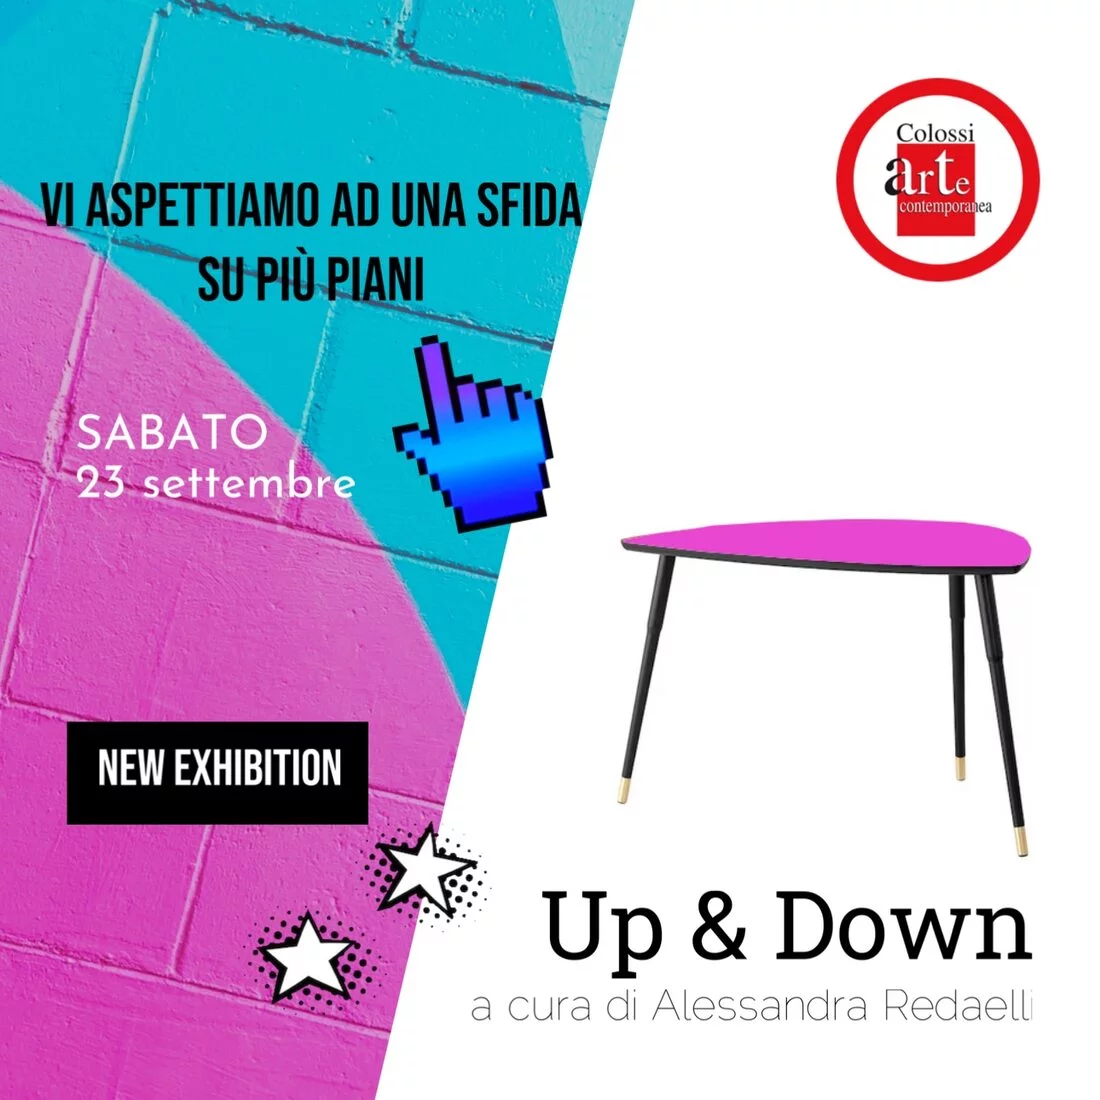 Up & Down. Tavole, tele e tavolini